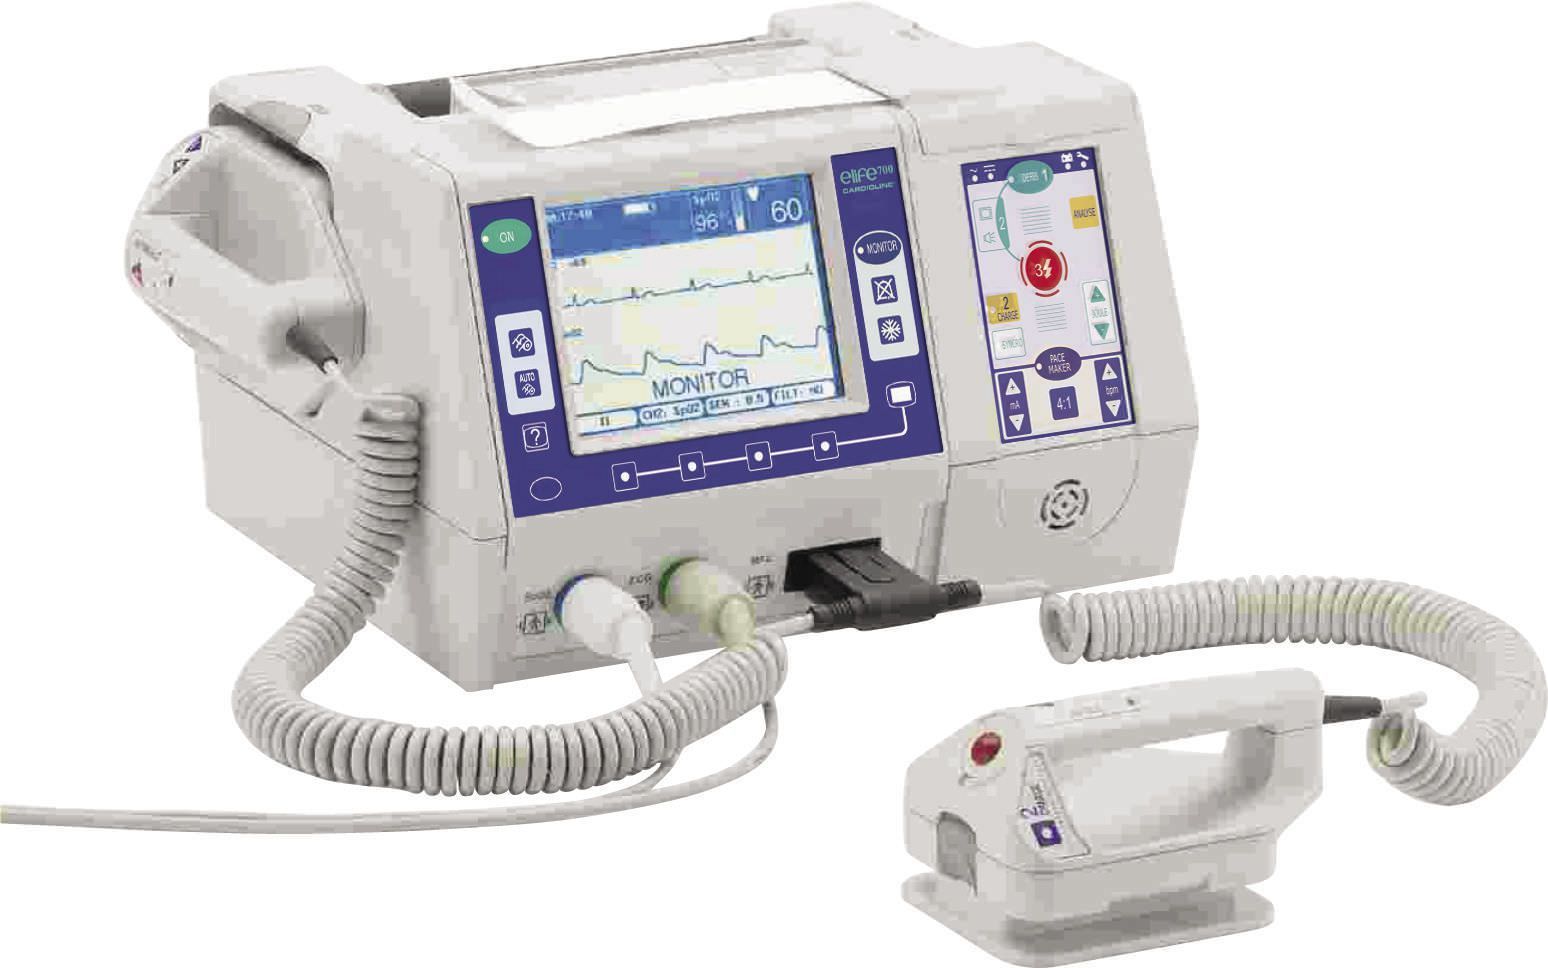 Semi-automatic external defibrillator / compact multi-parameter monitor elife700 Cardioline